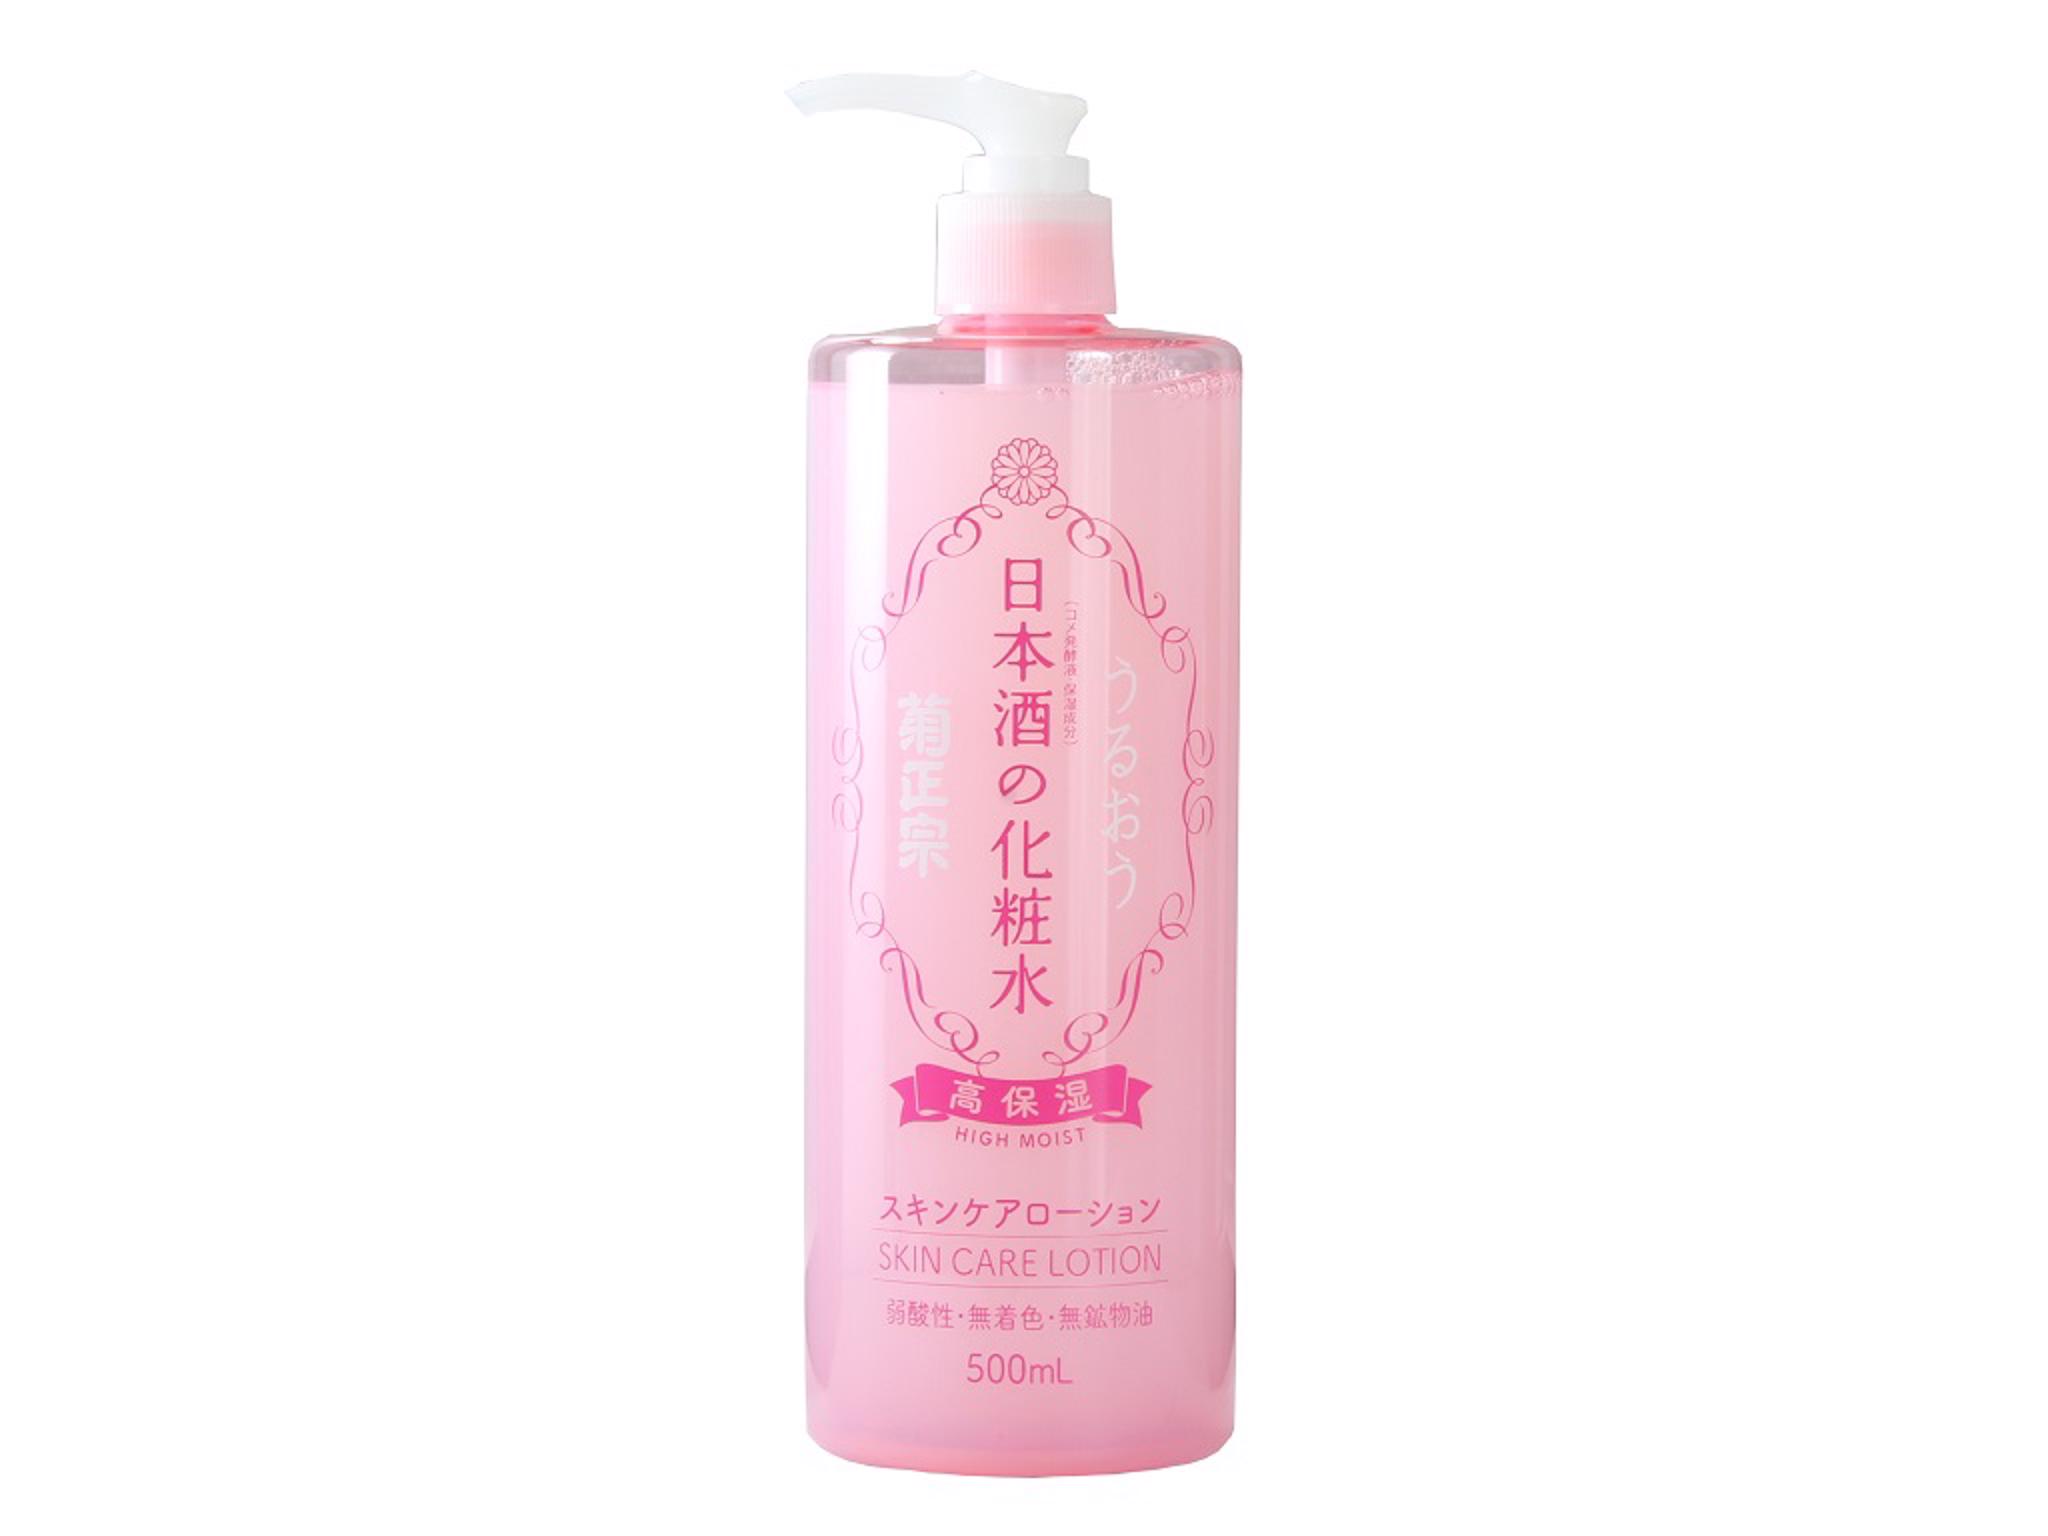 Kikumasamune - Sake Skin Care Lotion - High Moist 500ml  55